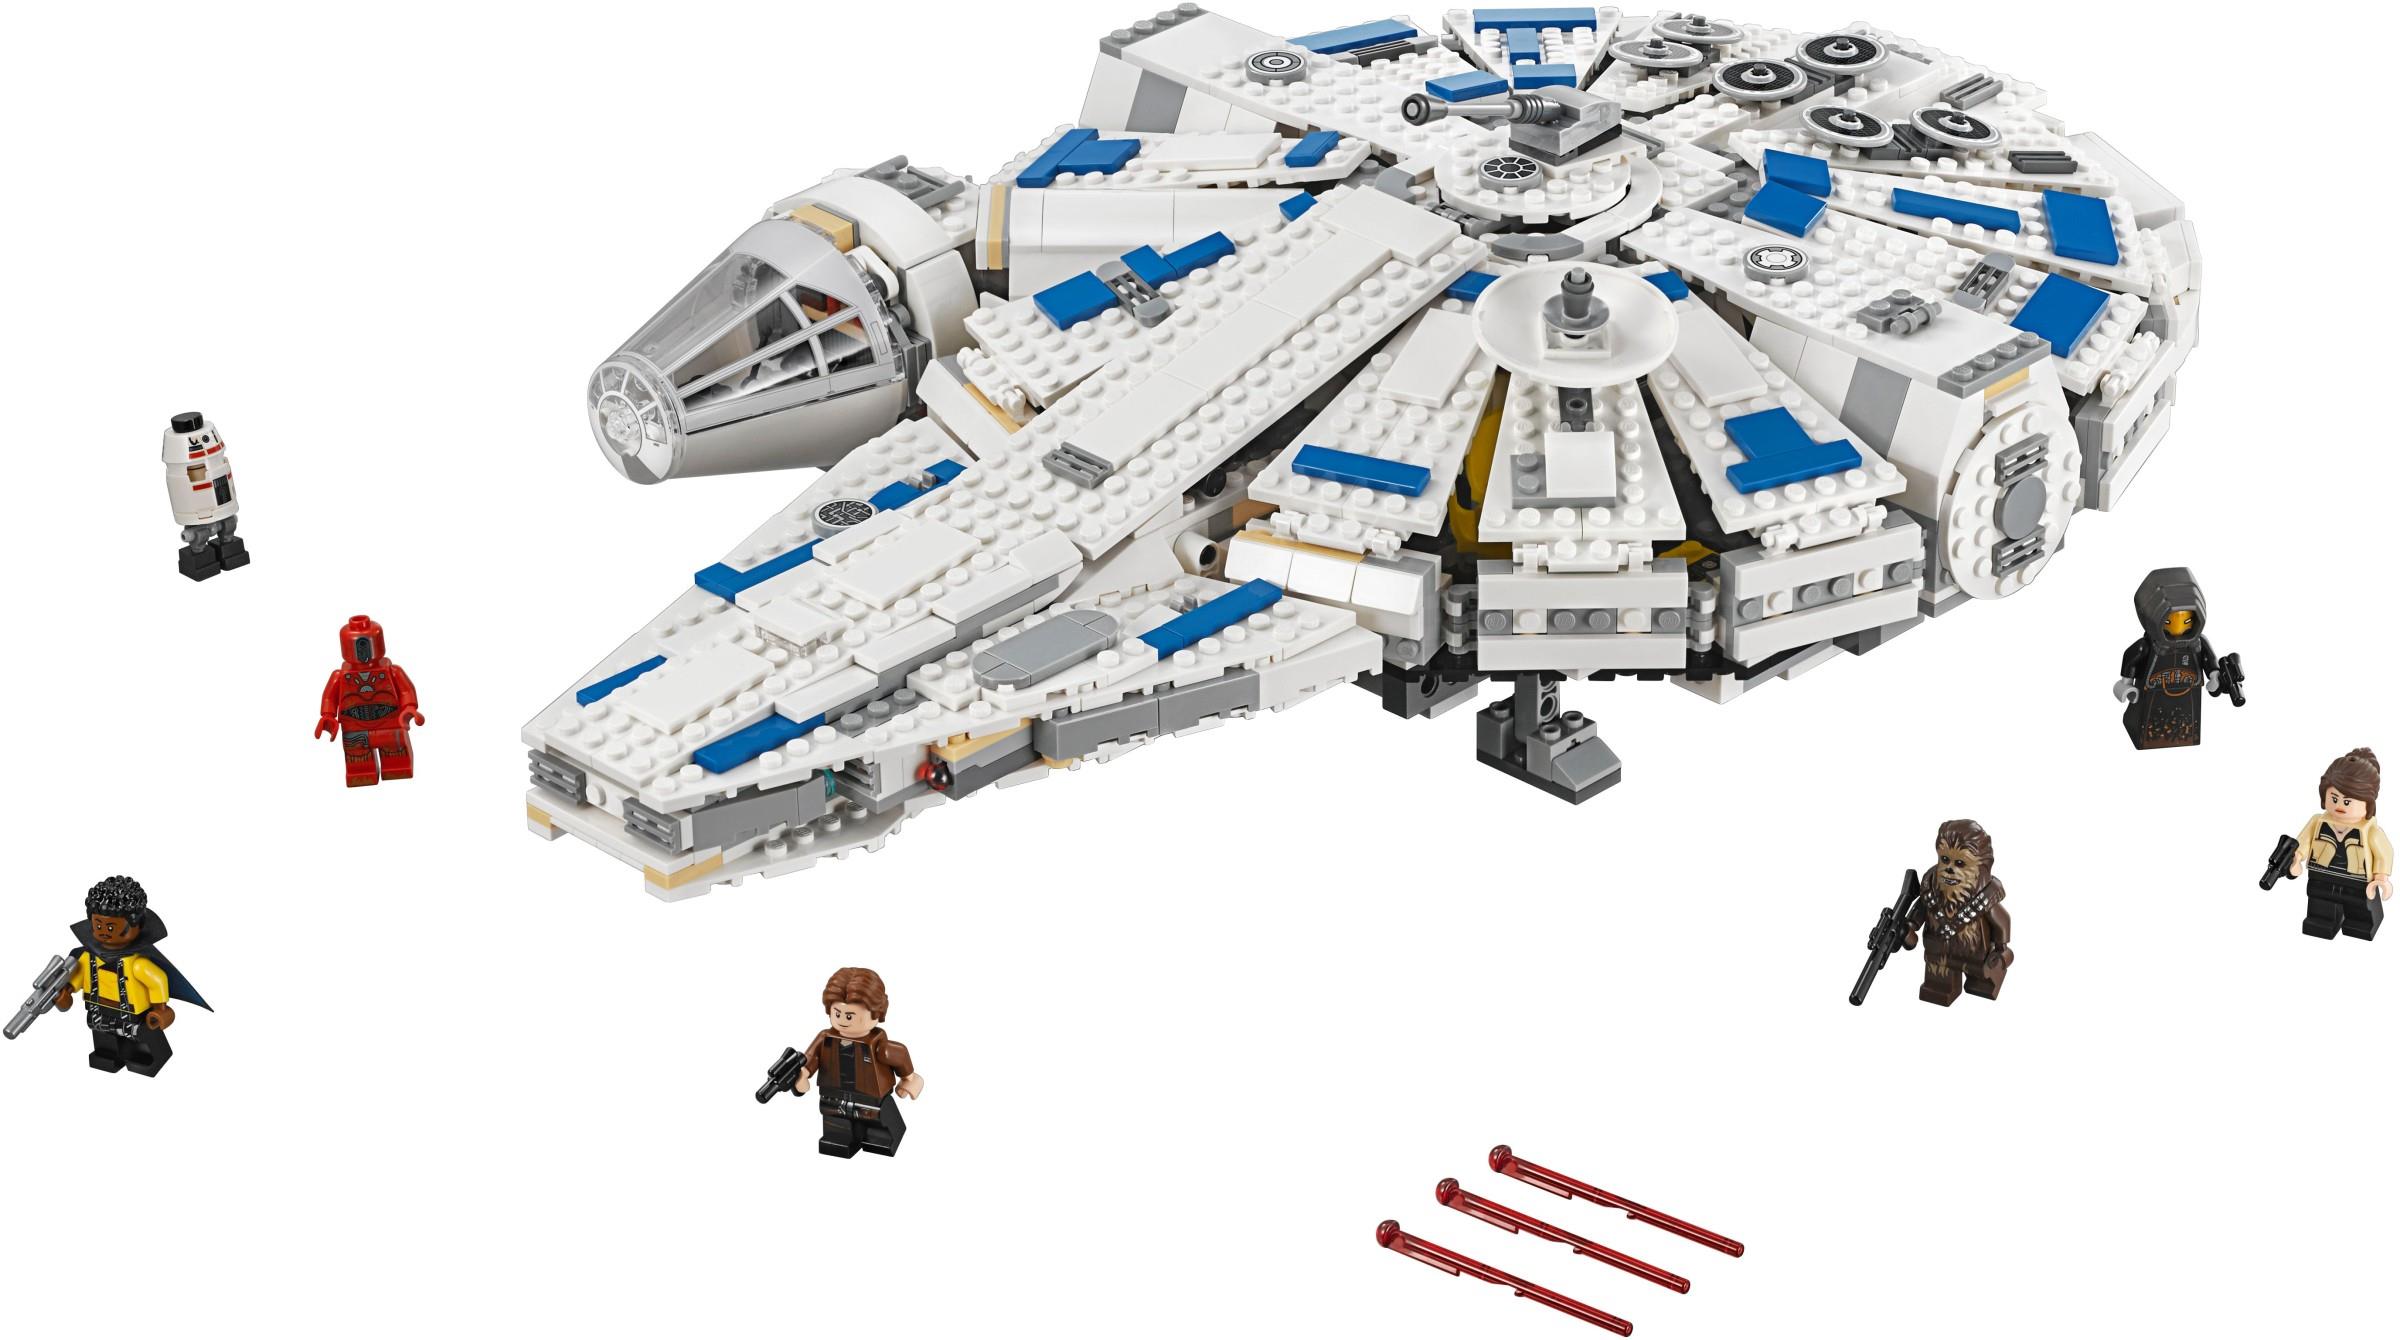 skrubbe hvorfor ikke defile LEGO 75212 Star Wars Solo Kessel Run Millennium Falcon | BrickEconomy